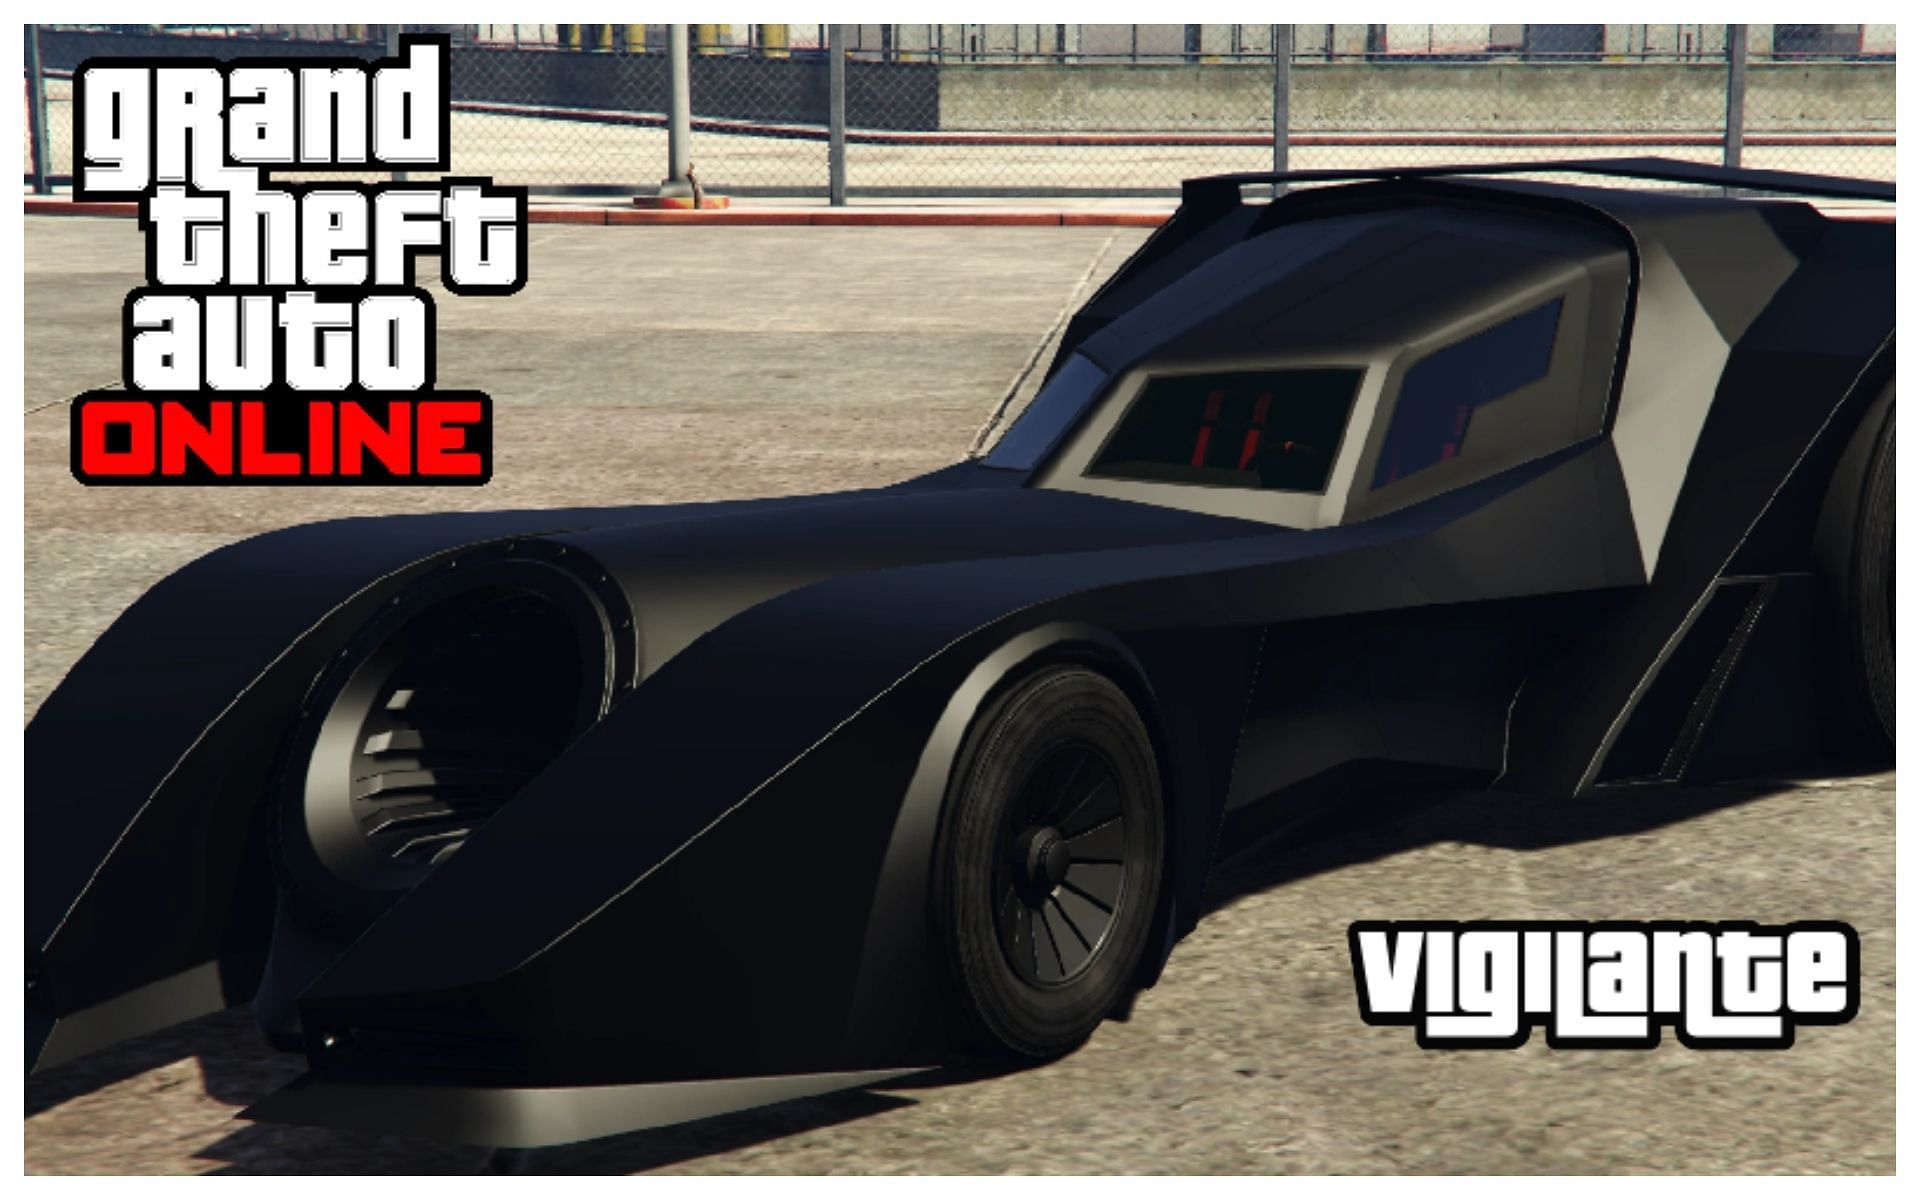 The Vigilante is sometimes called the Batman car (Image via Sportskeeda)